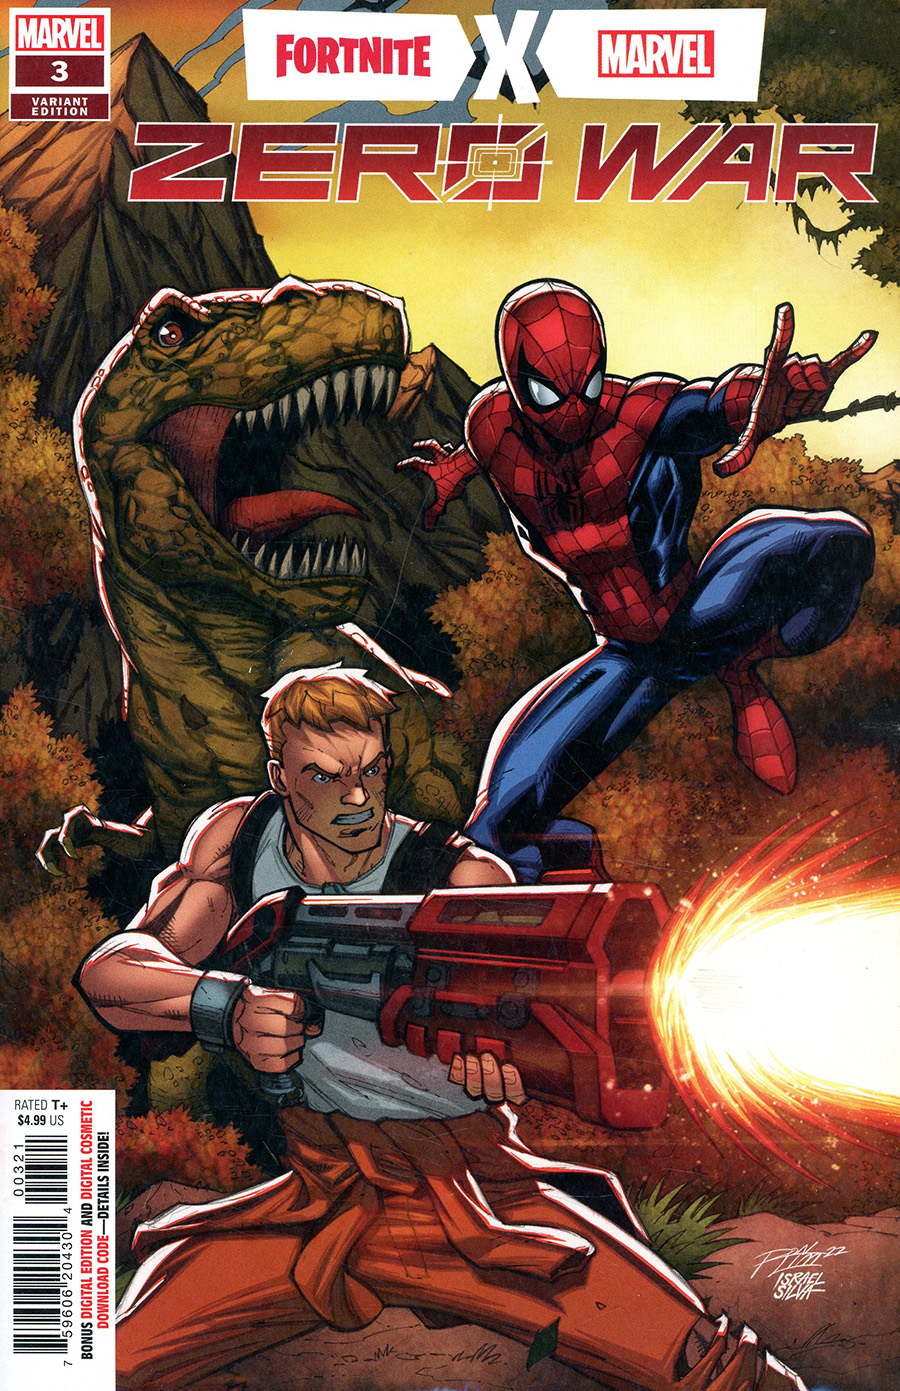 Fortnite x Marvel Zero War #3 Cover B Variant Ron Lim Cover